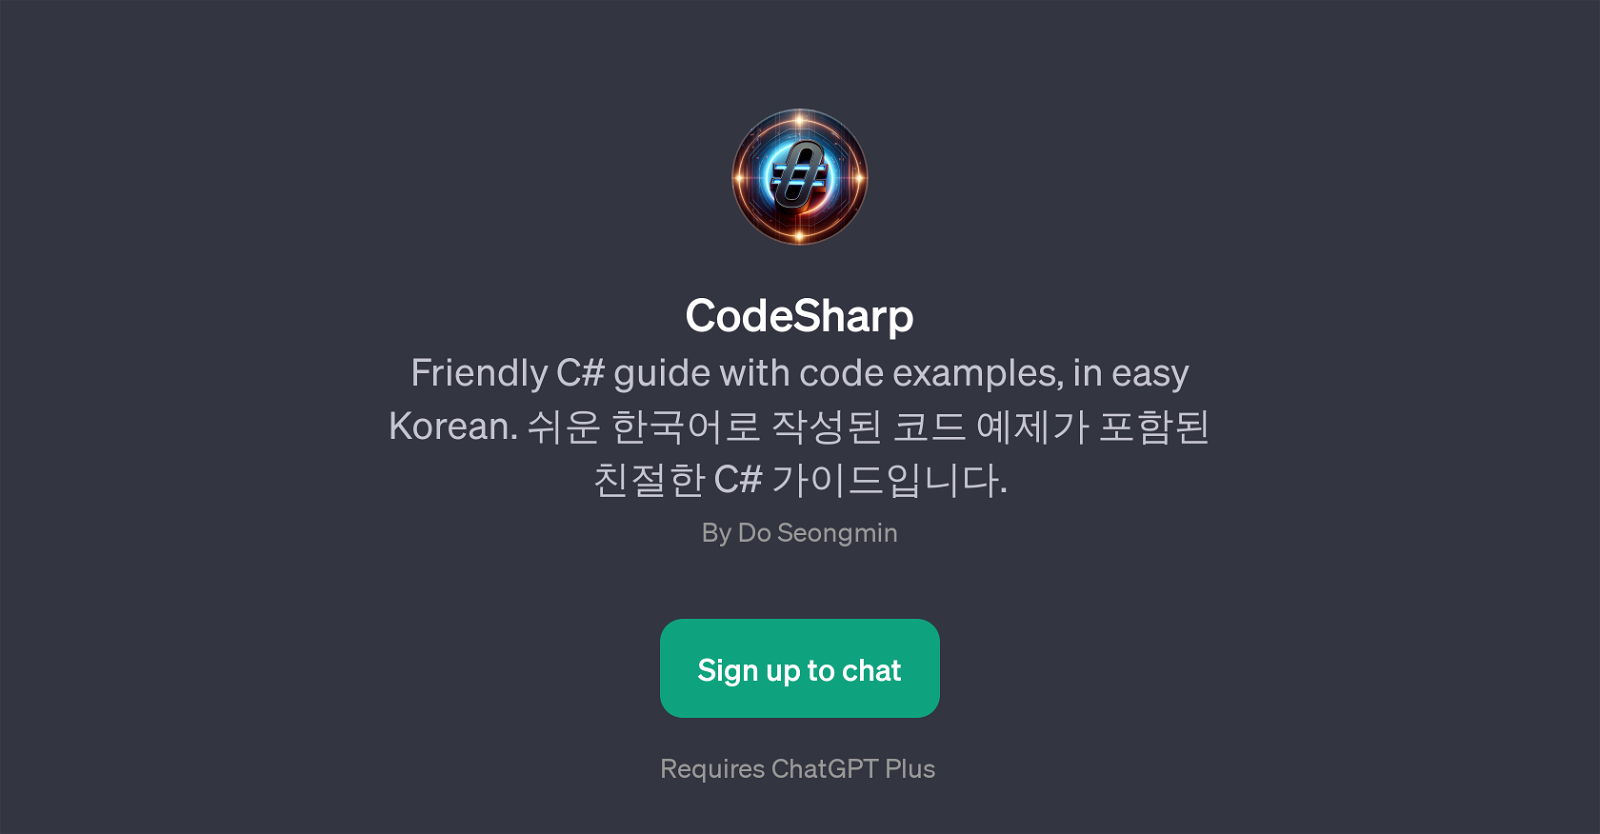 CodeSharp website